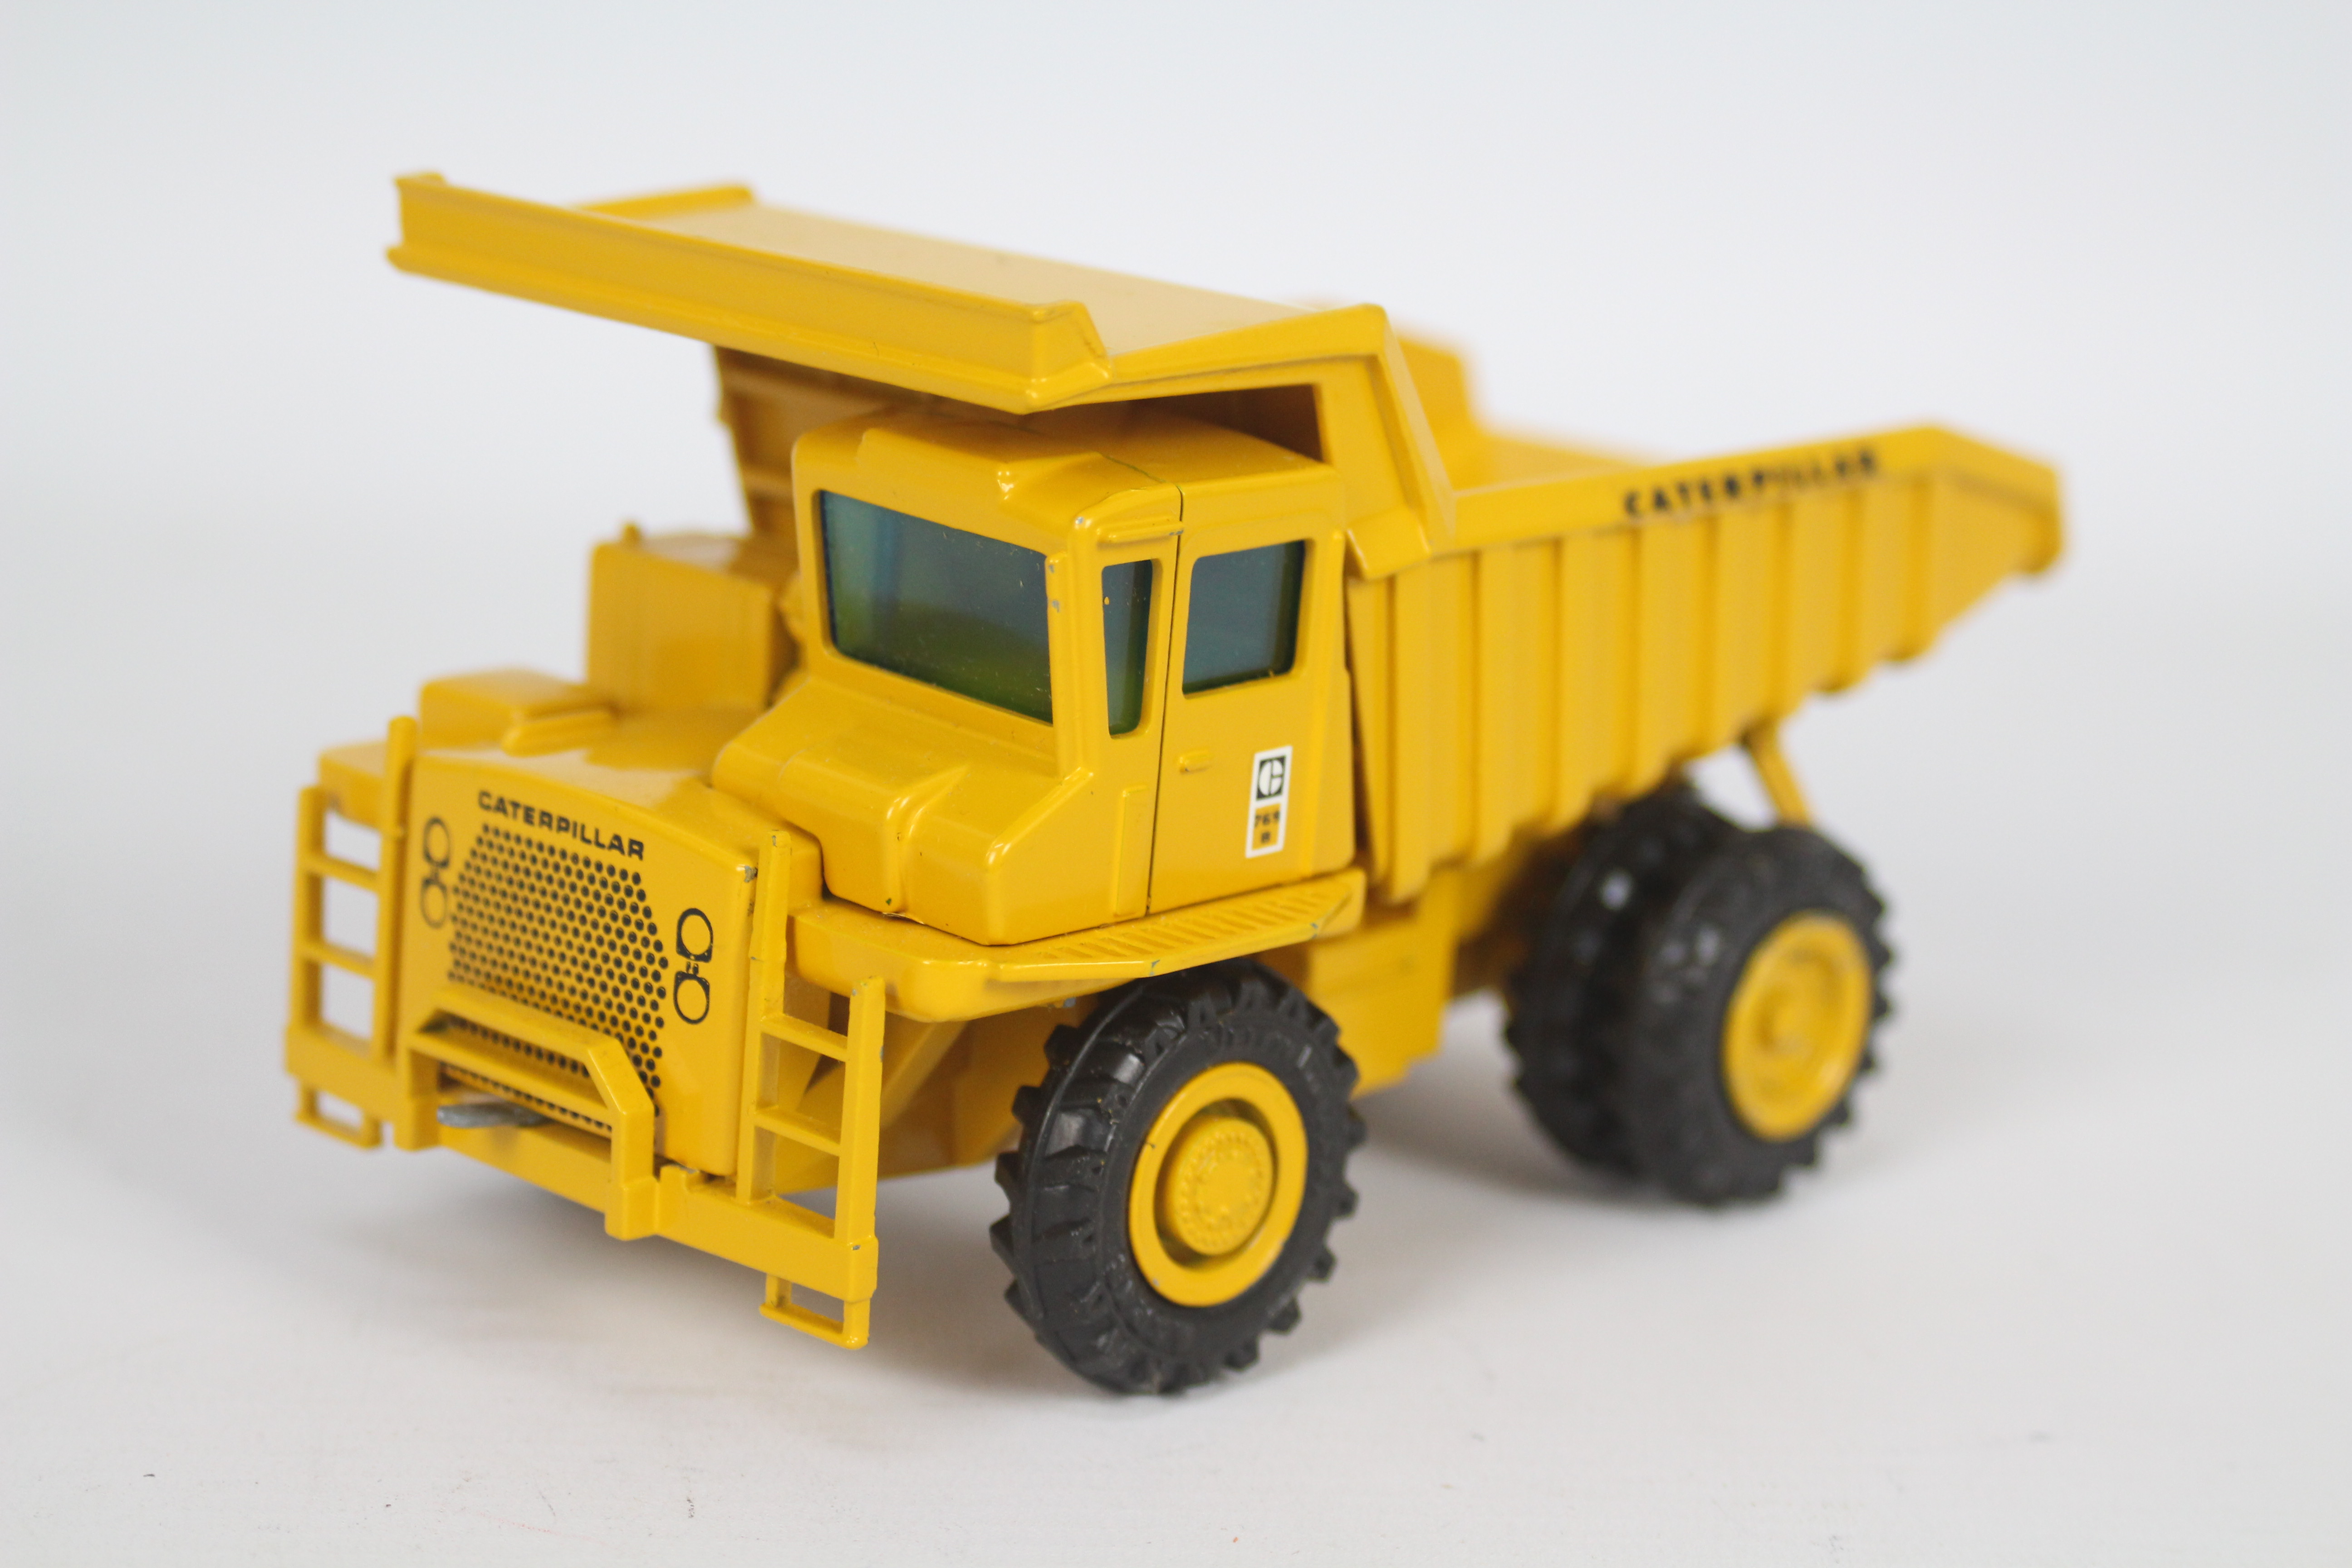 Gescha - A boxed CAT 769 Muldenkipper dumper truck in 1:50 scale. # 276. - Image 2 of 4